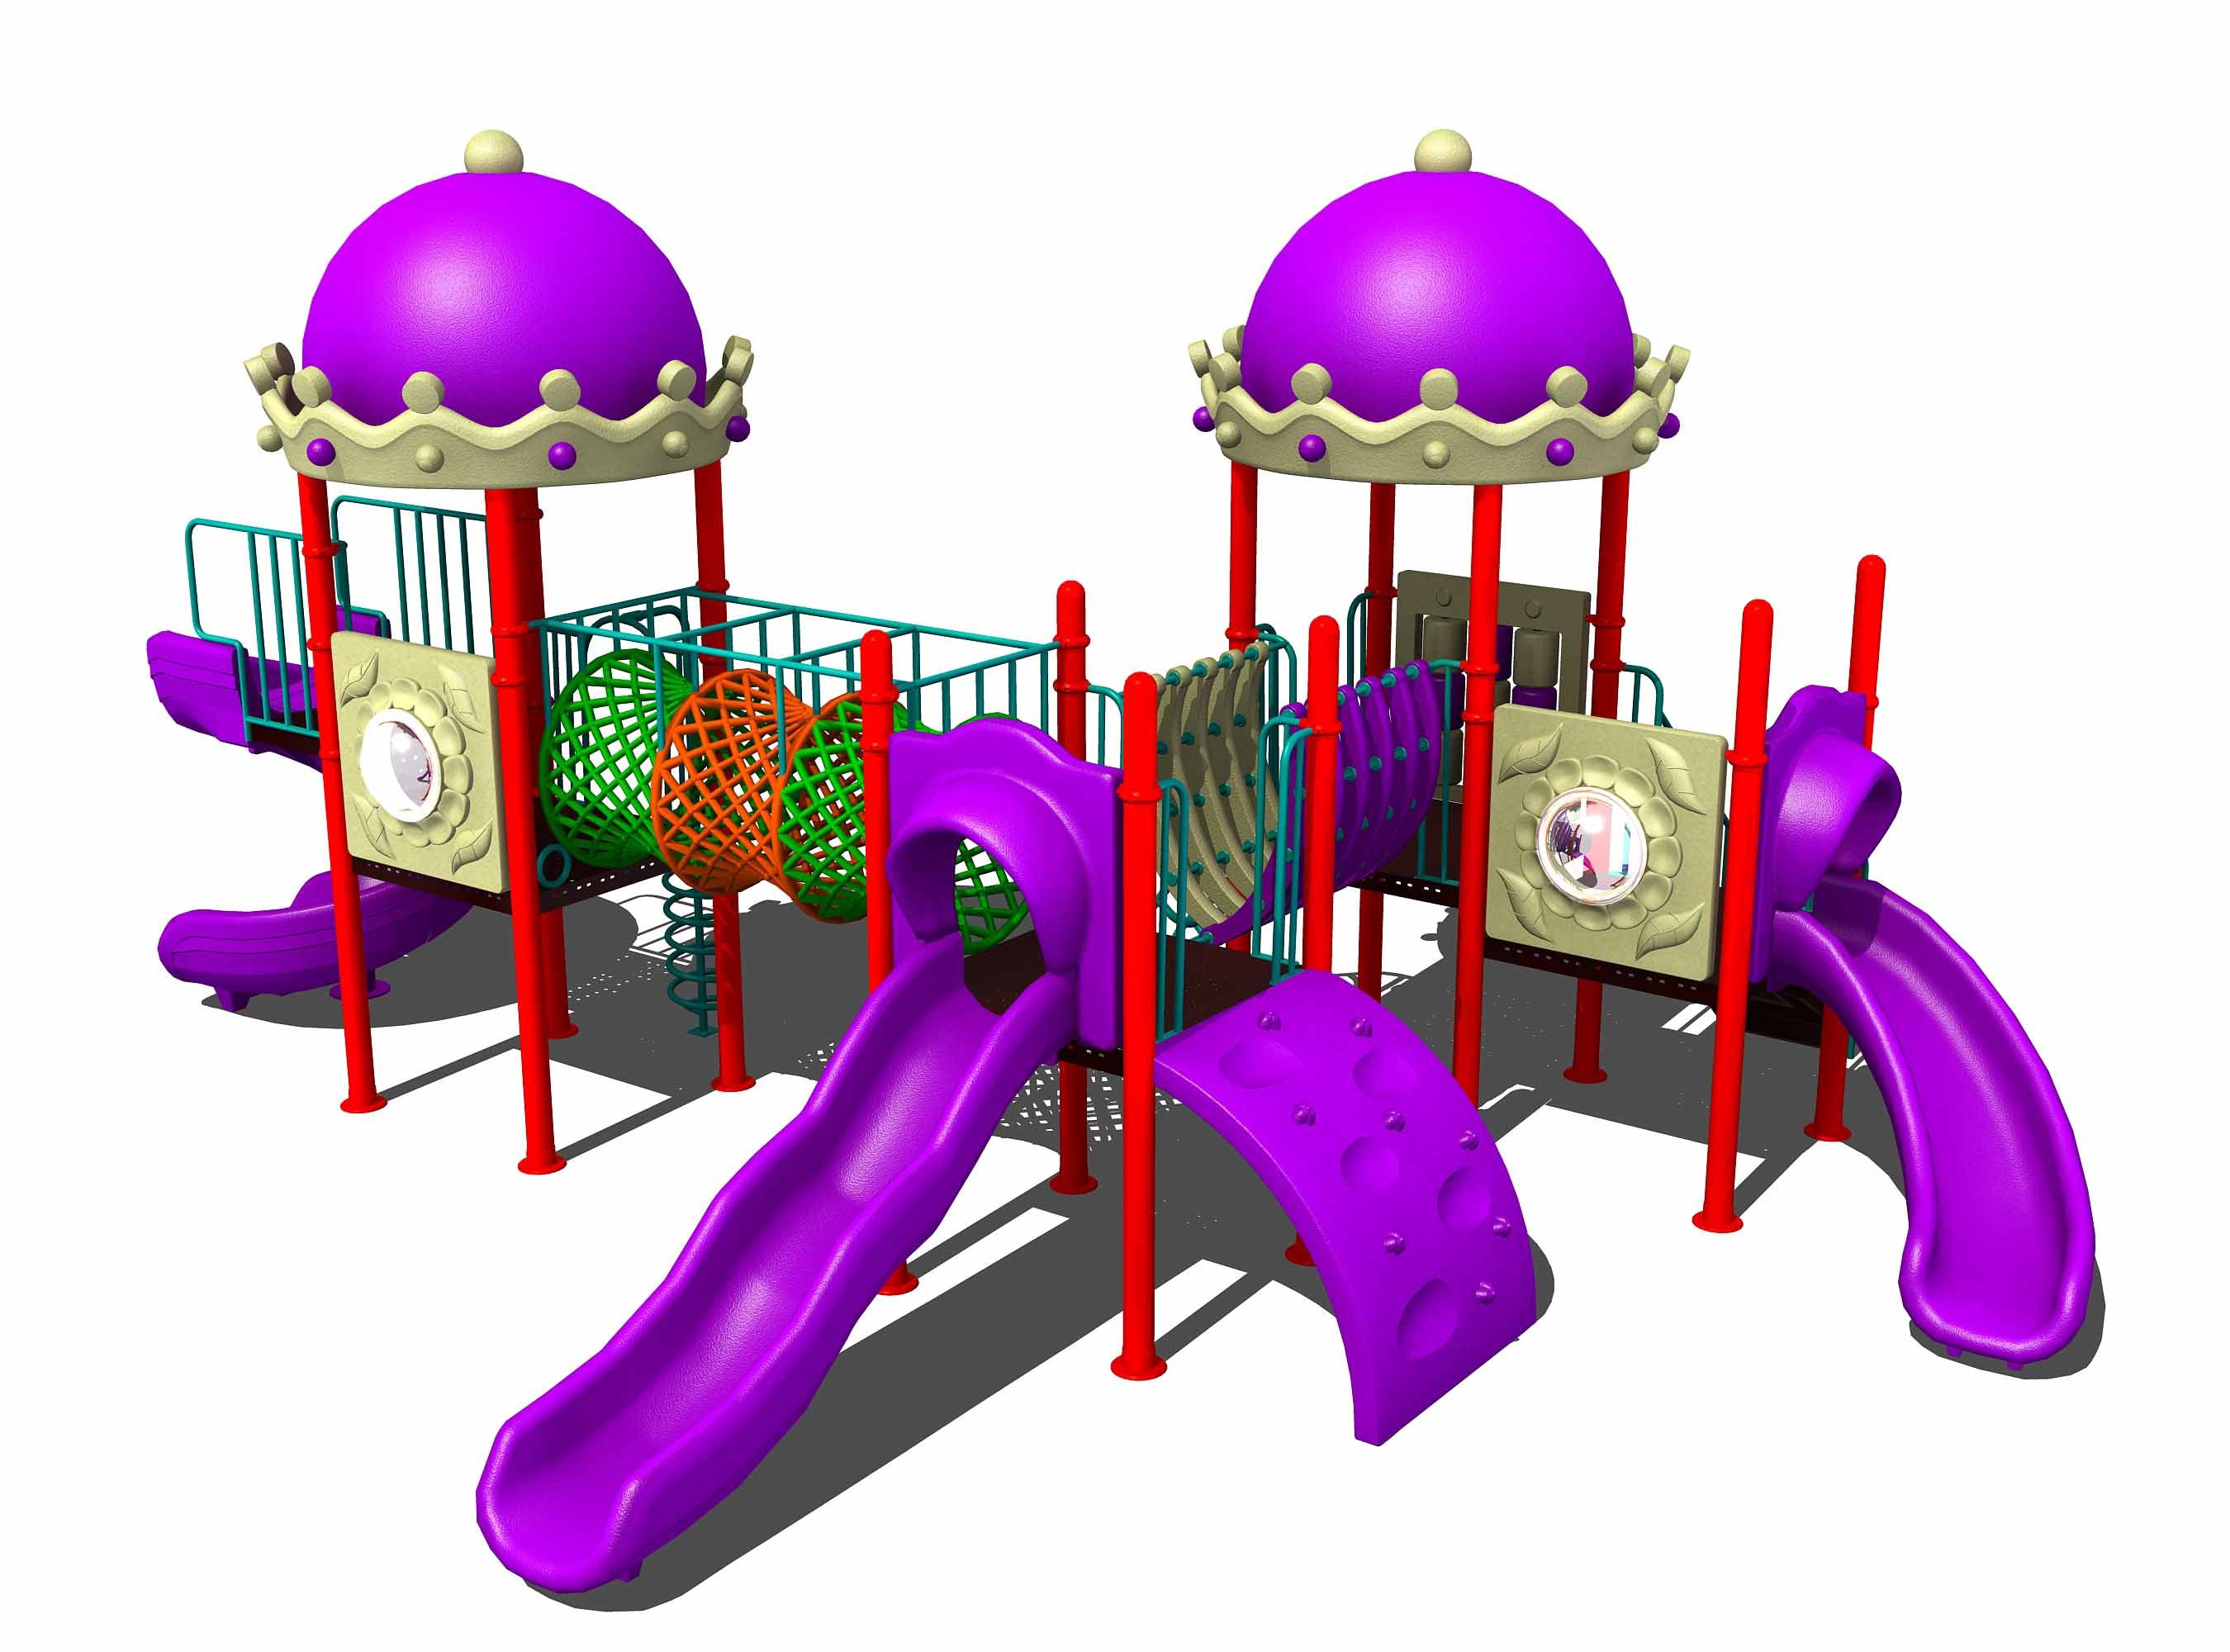 Children's Playground Equipment for Outdoor